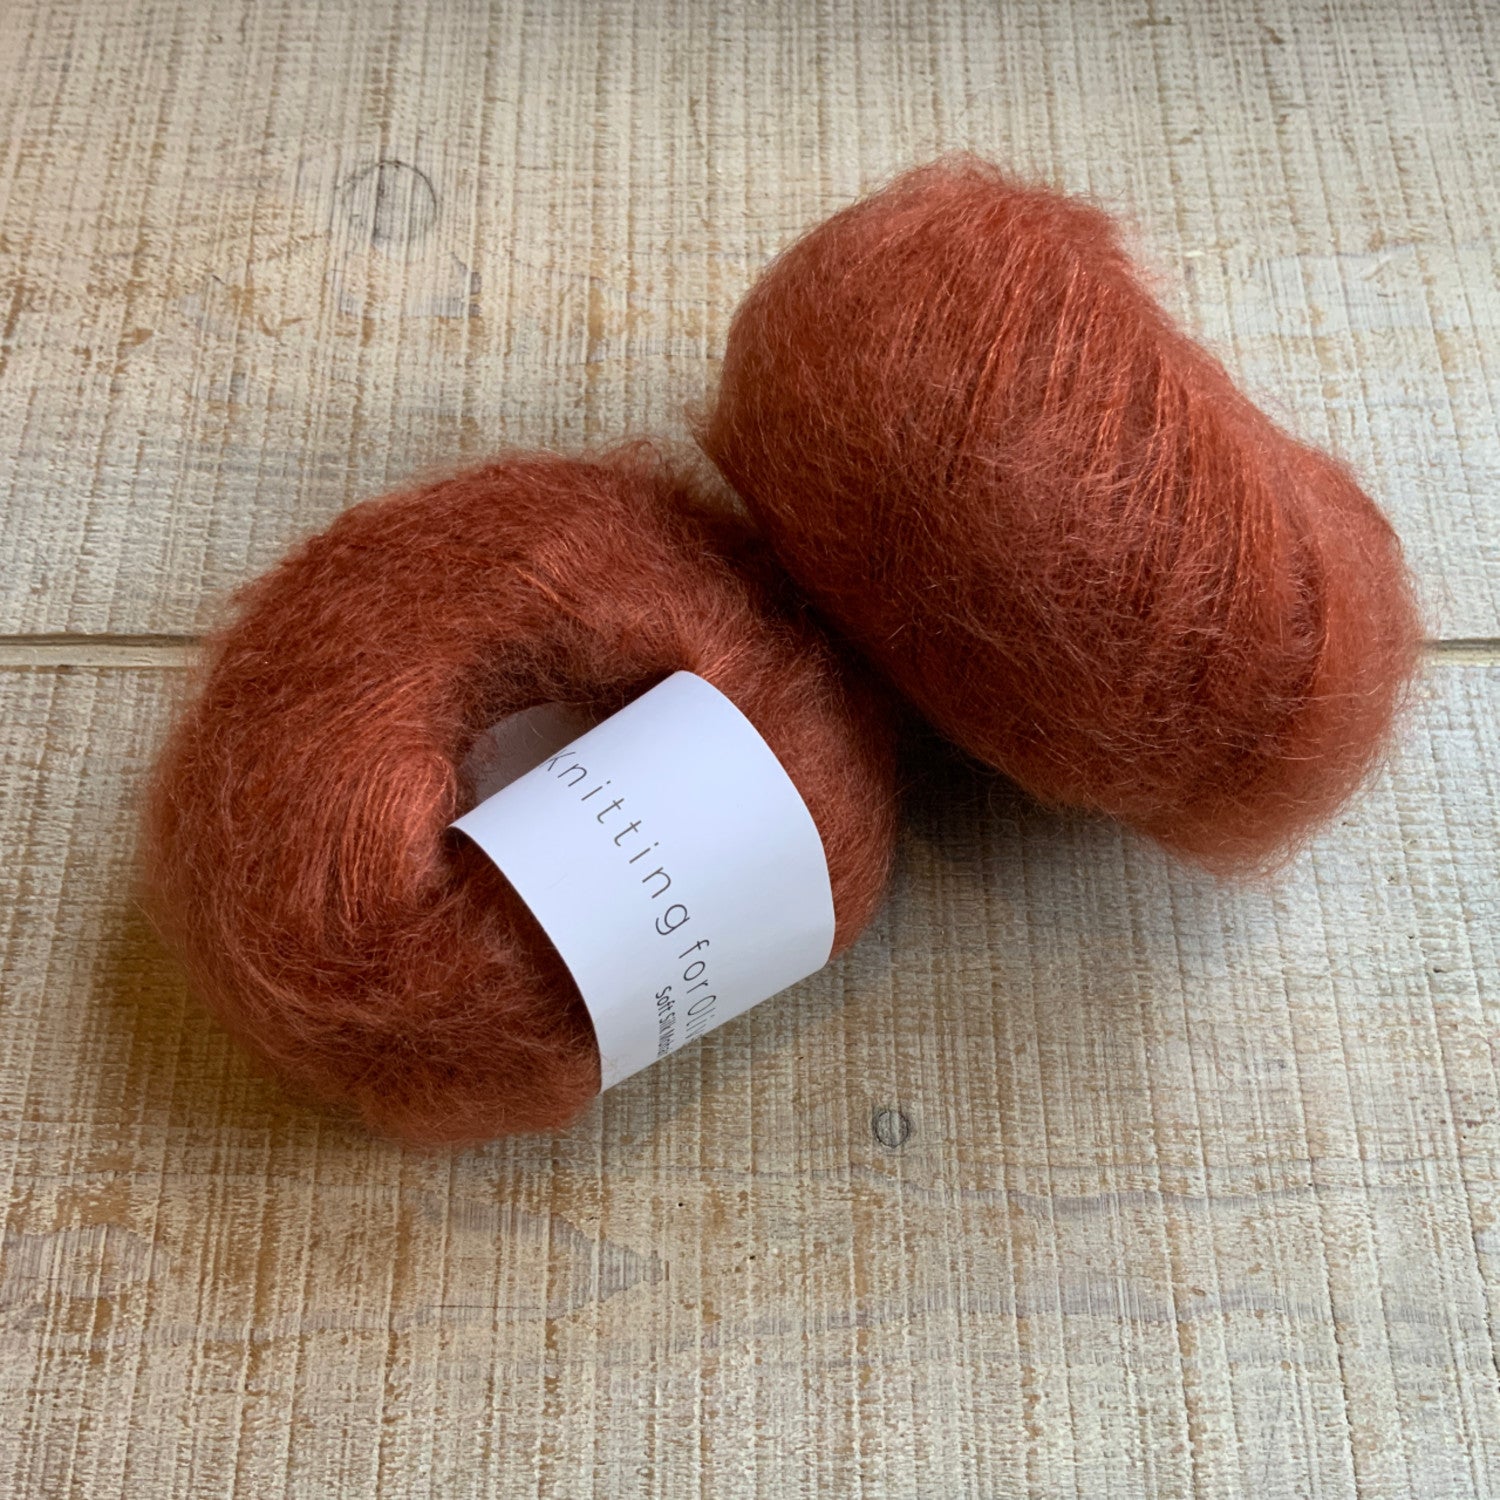 Knitting for Olive Merino - Soft Peach